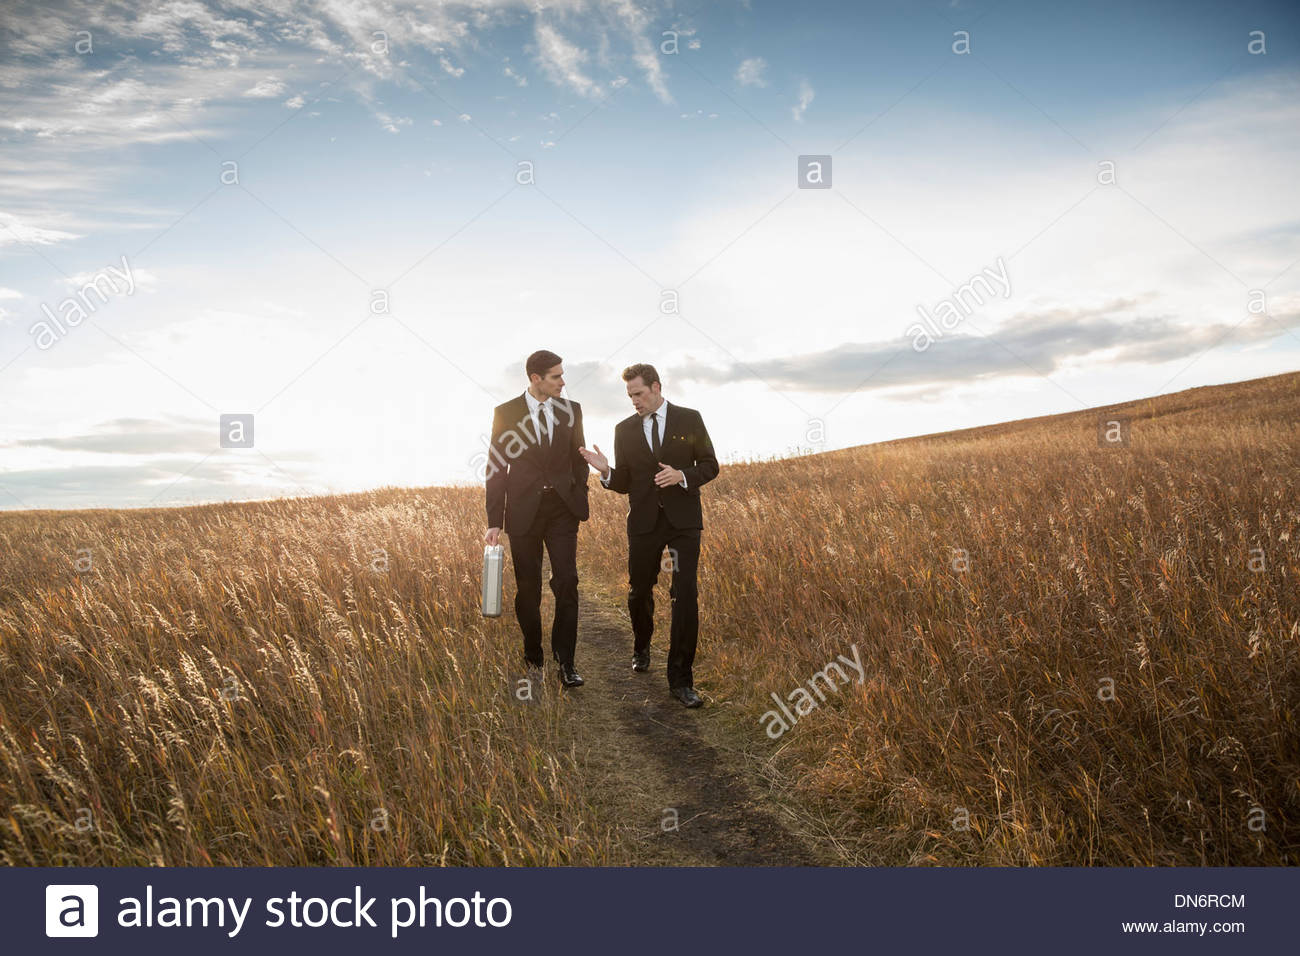 Businessmen conversing in field Stock Photo